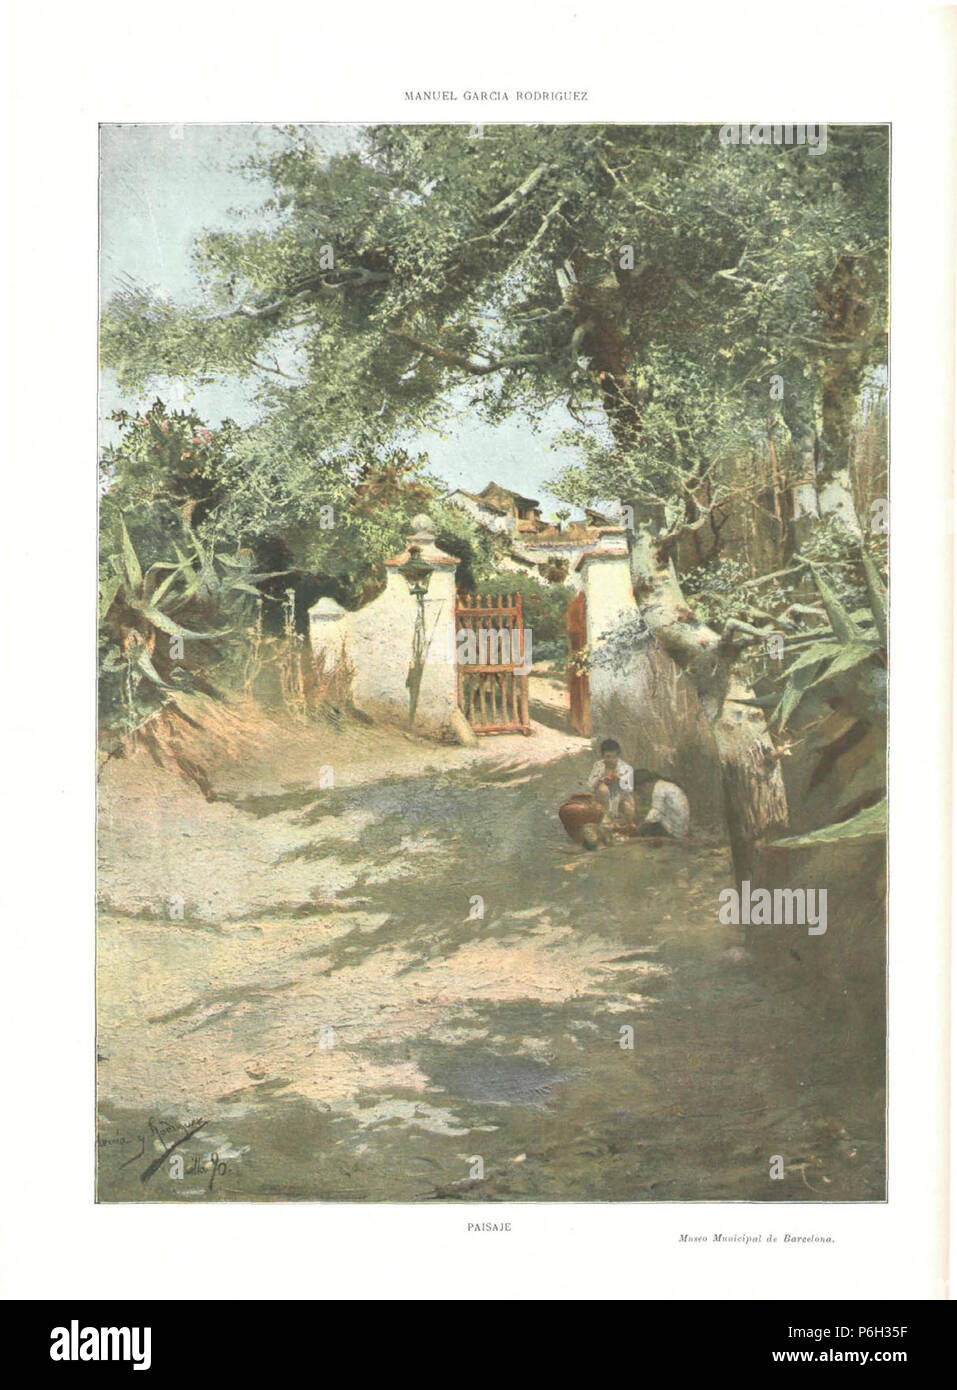 1904, Álbum Salón, Paisaje, Manuel García Rodríguez y. Foto Stock